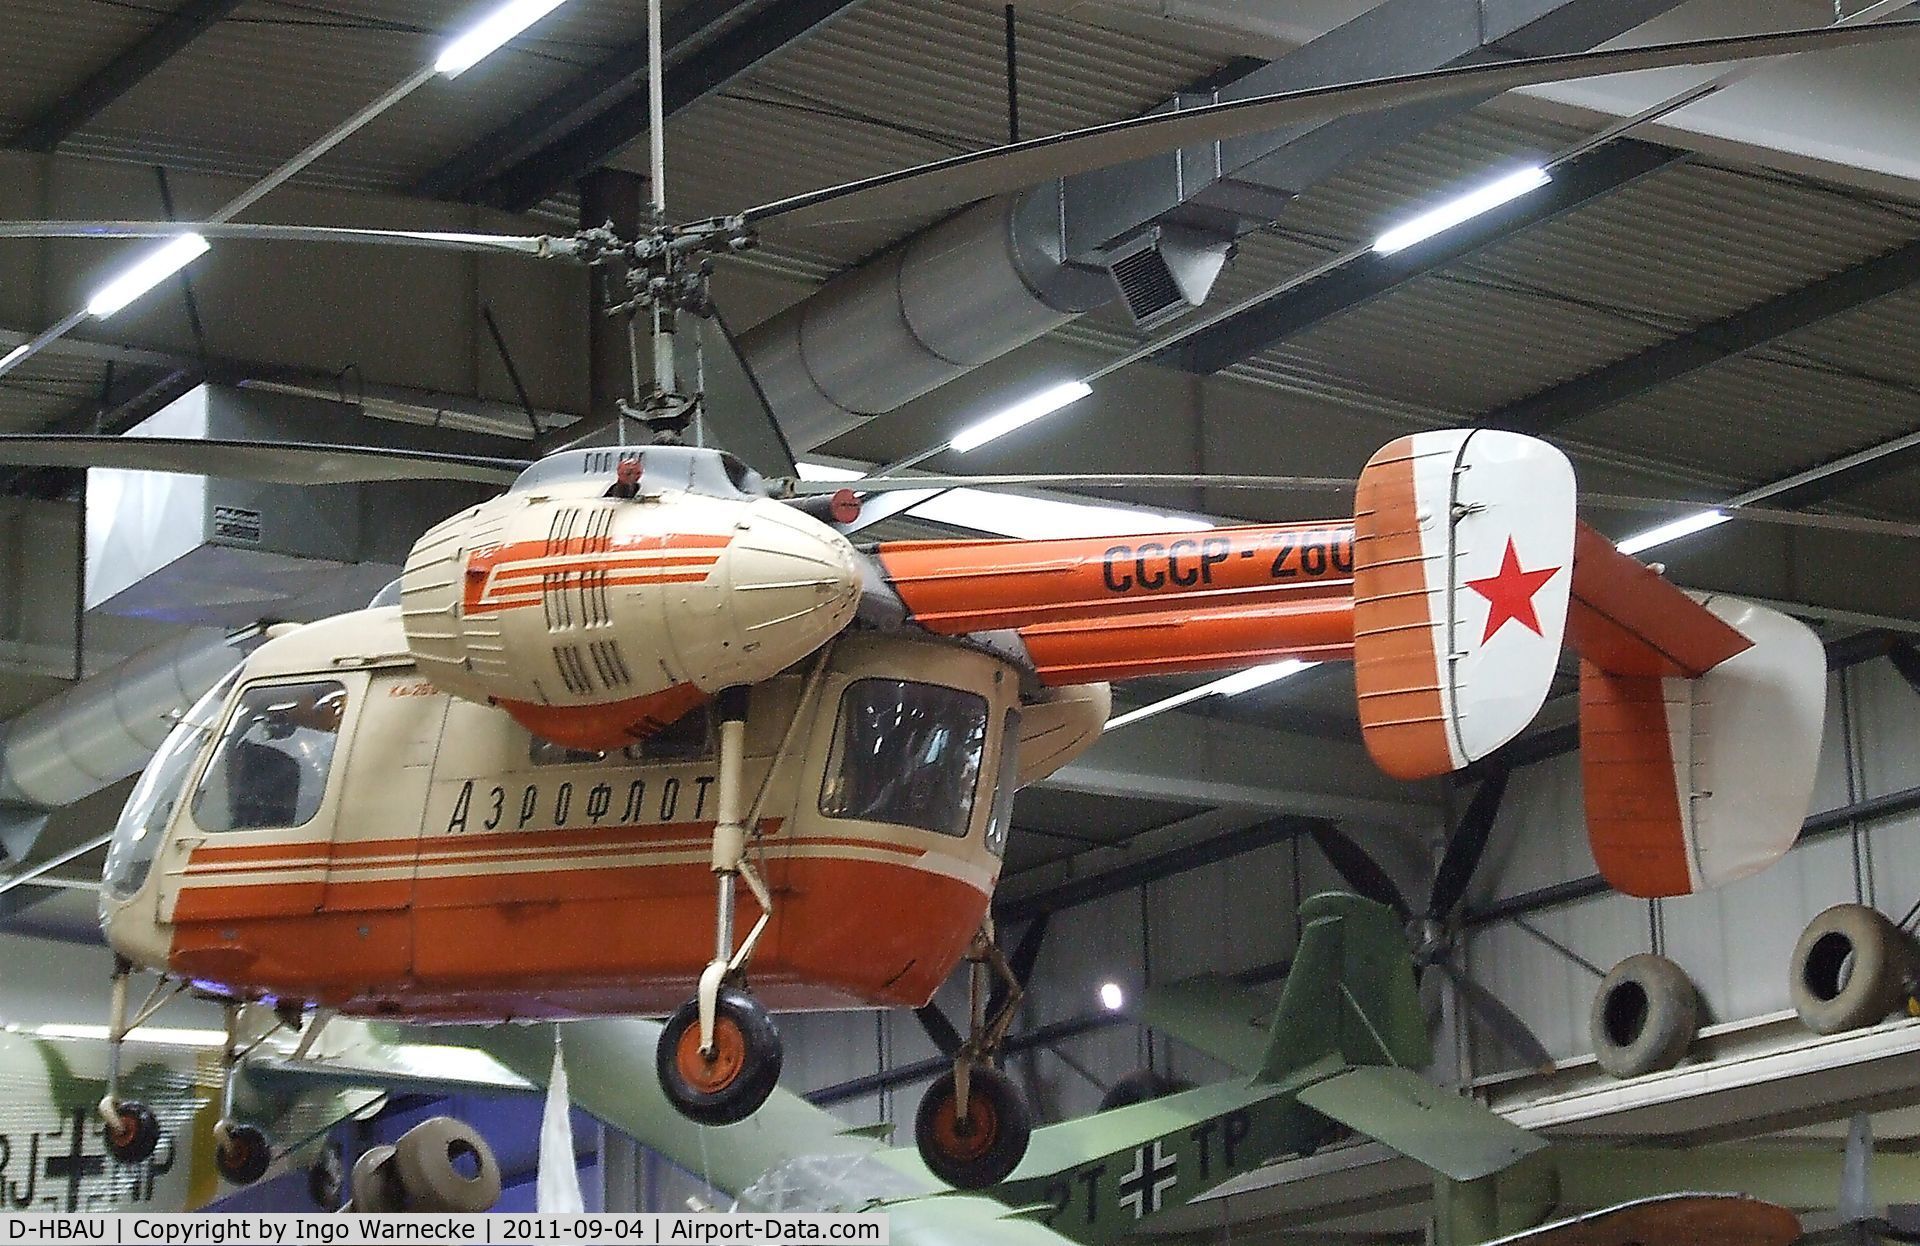 D-HBAU, 1973 Kamov Ka-26 Hoodlum C/N 7303204, Kamov Ka-26 Hoodlum at the Auto & Technik Museum, Sinsheim